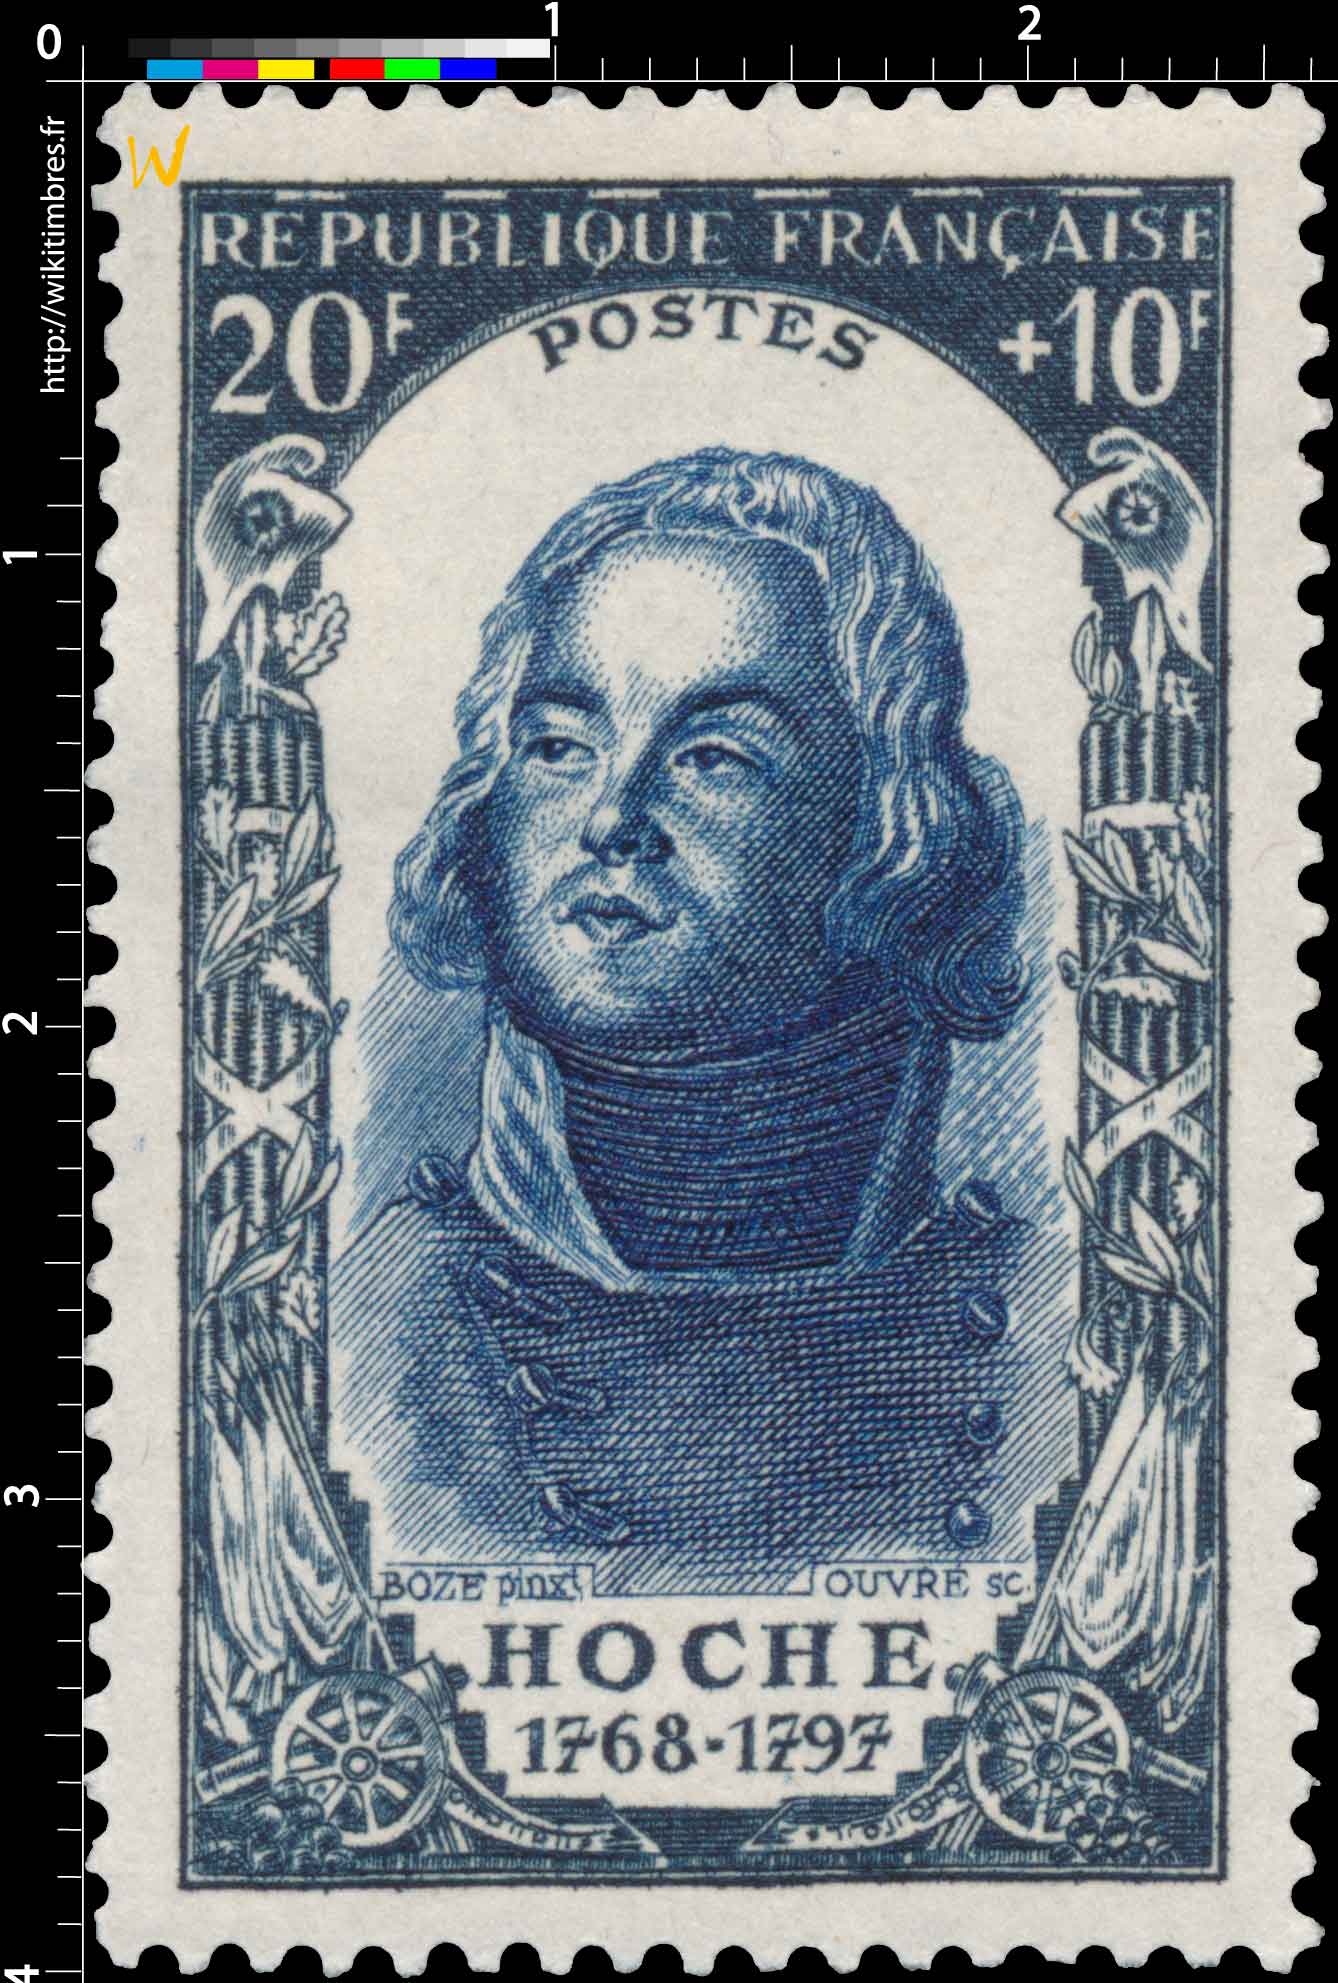 HOCHE 1768-1797